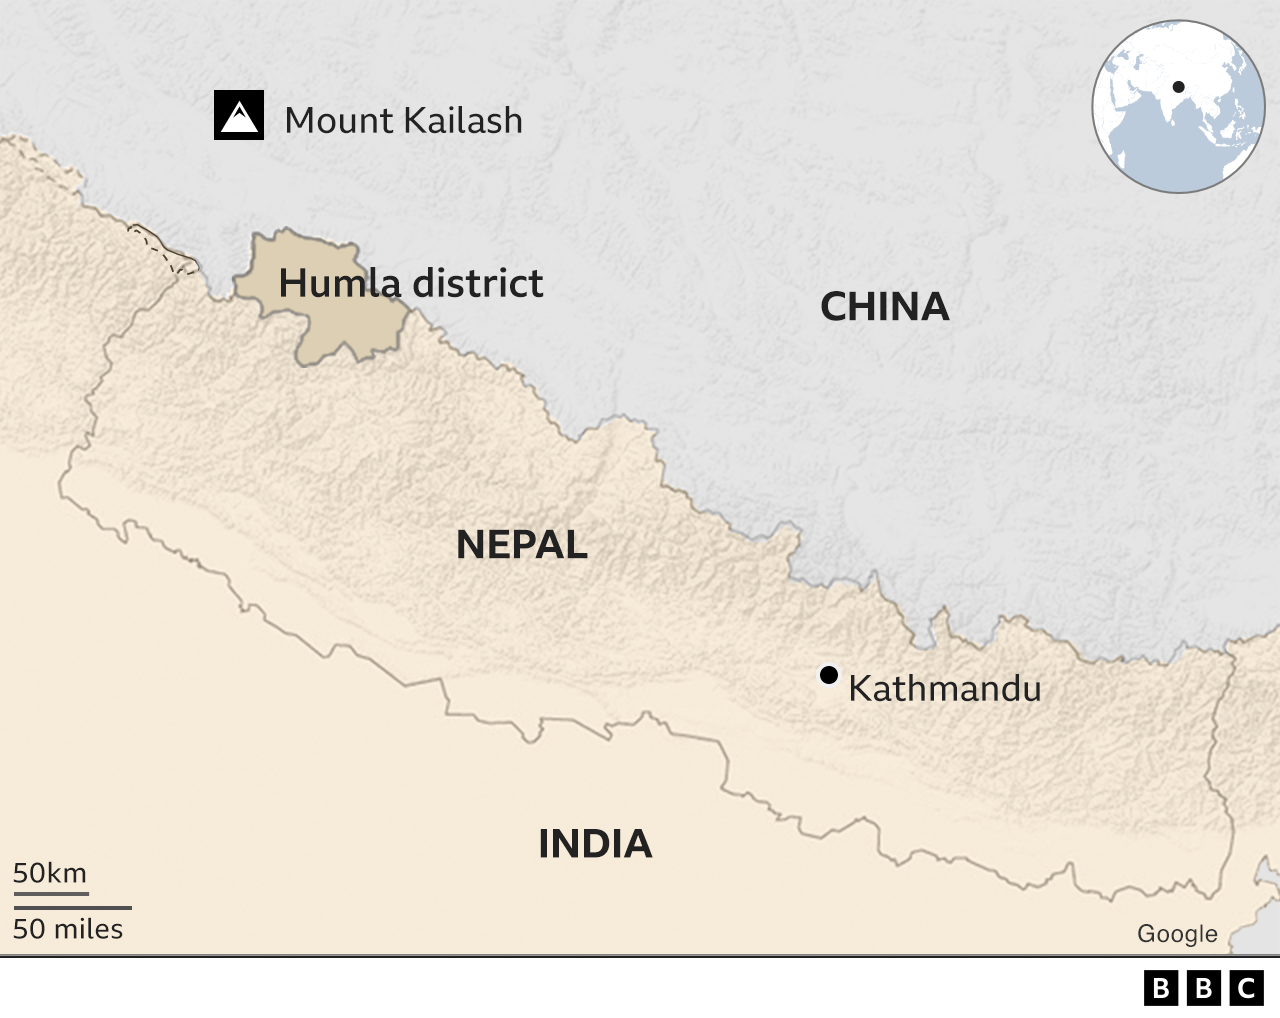 China encroaching along Nepal border report